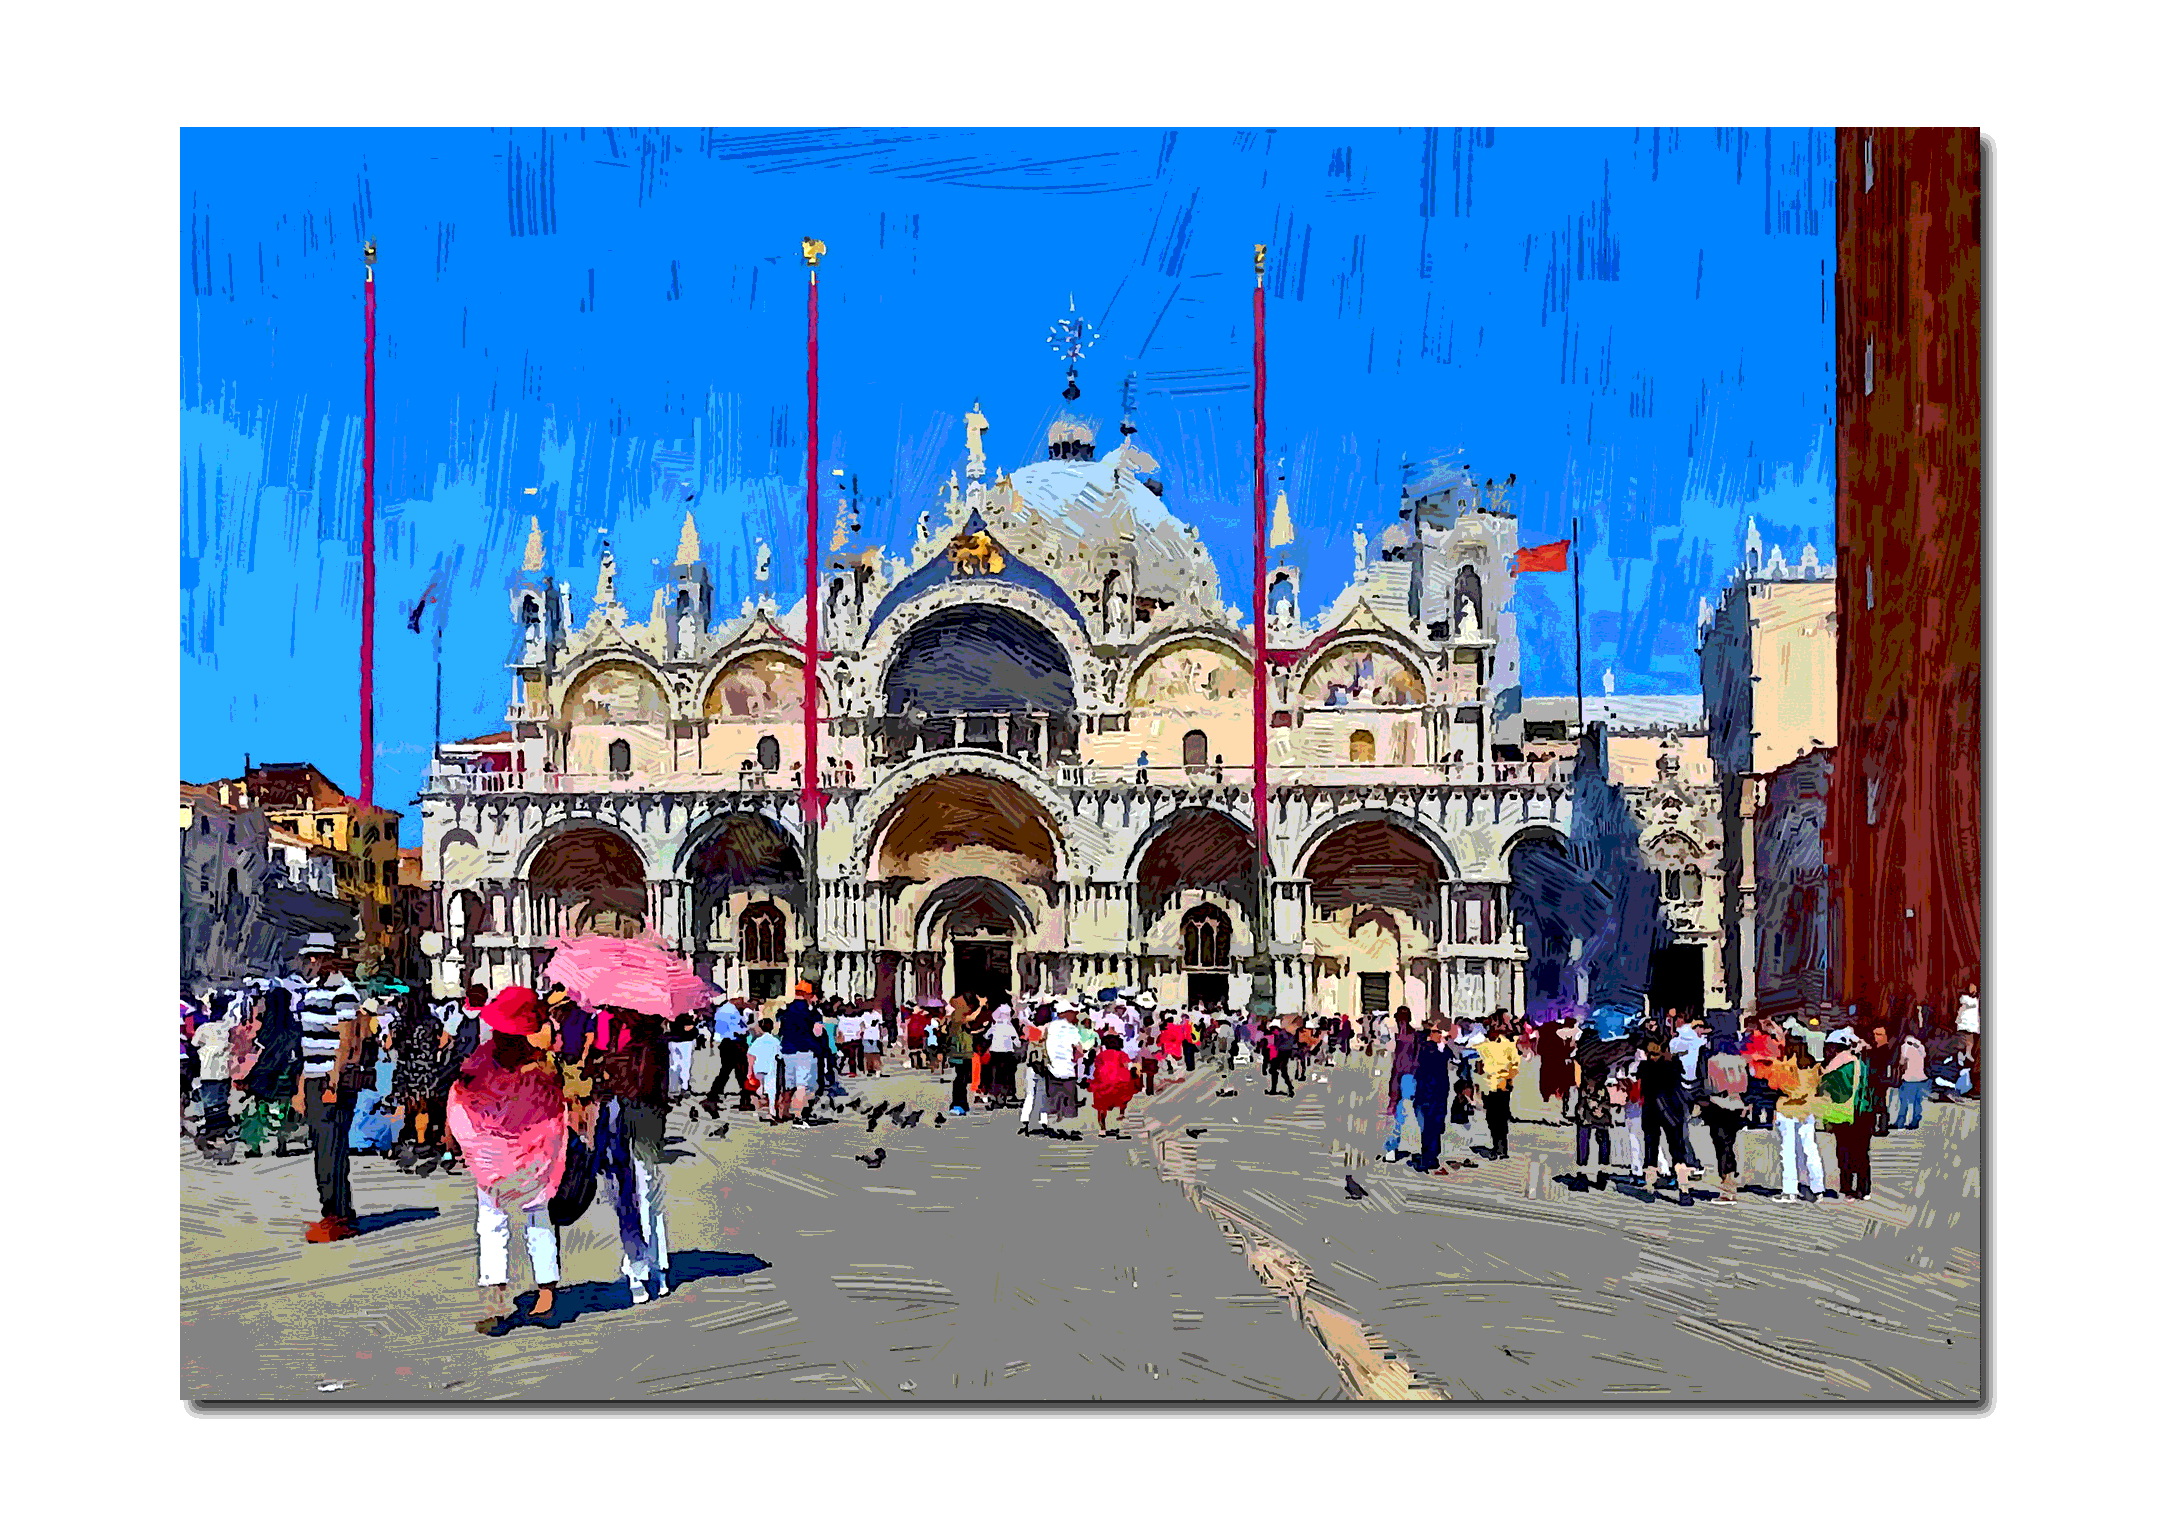 Venice - St. Mark's Basilica...